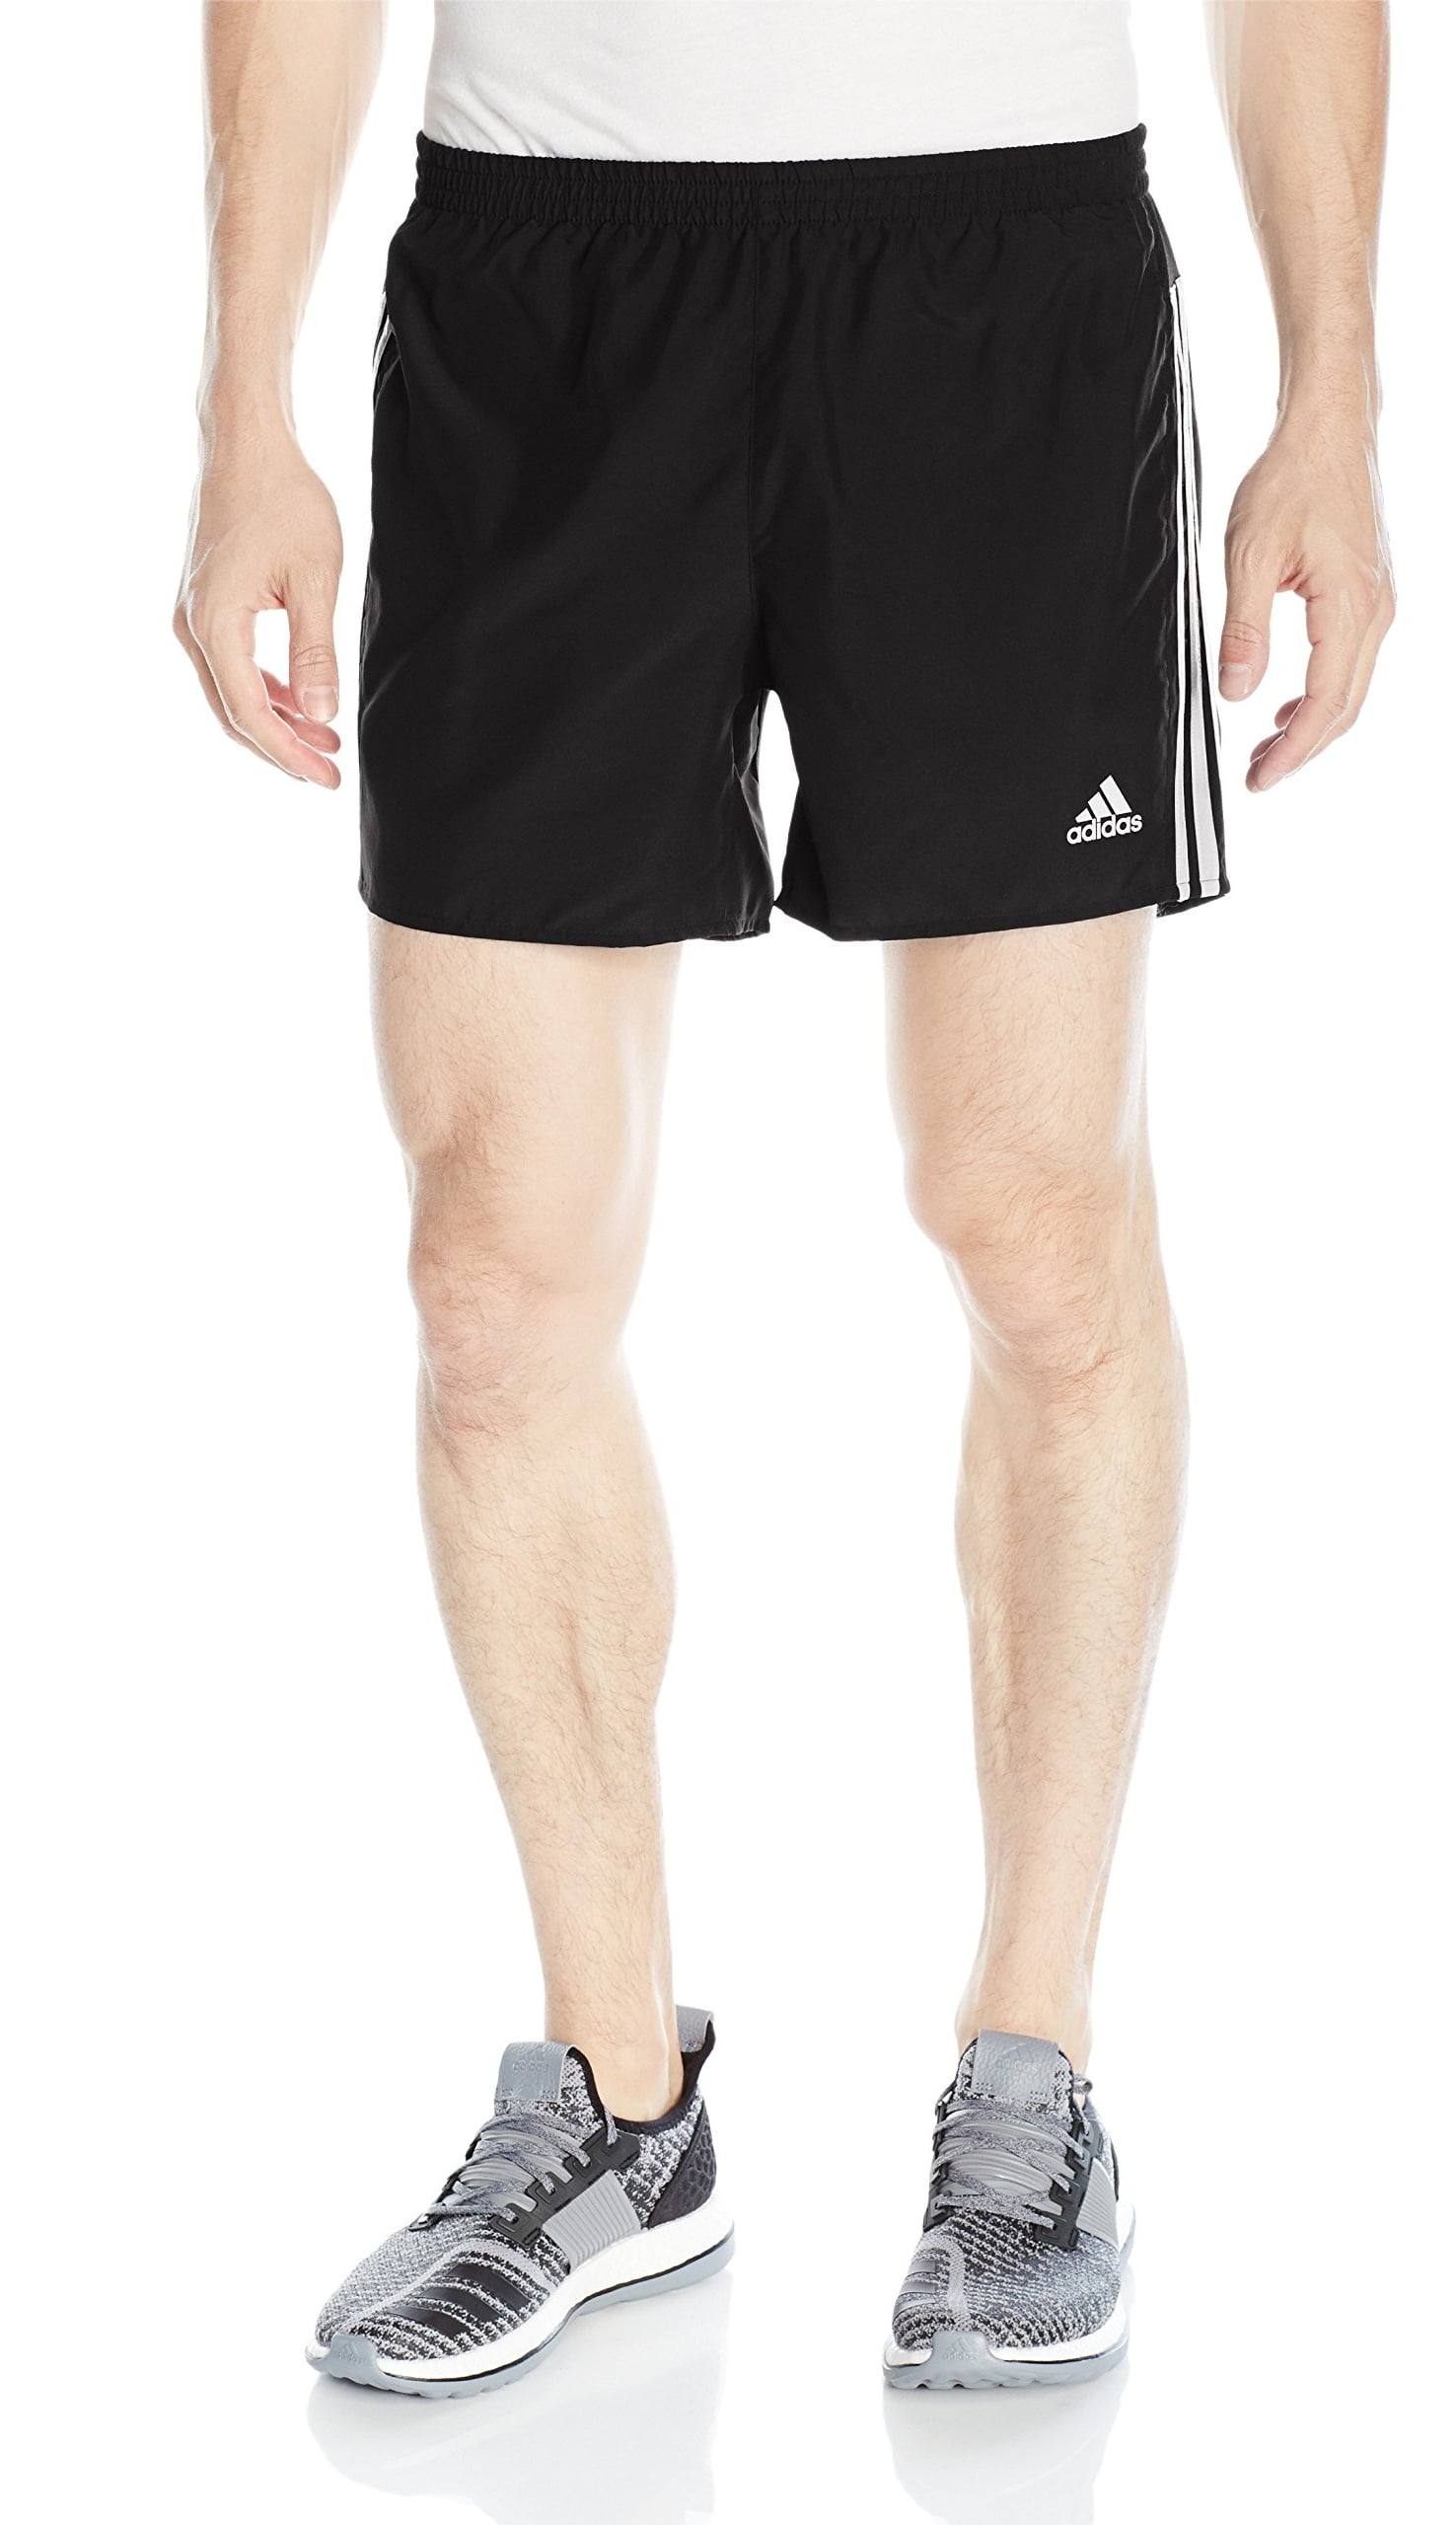 adidas men's response shorts